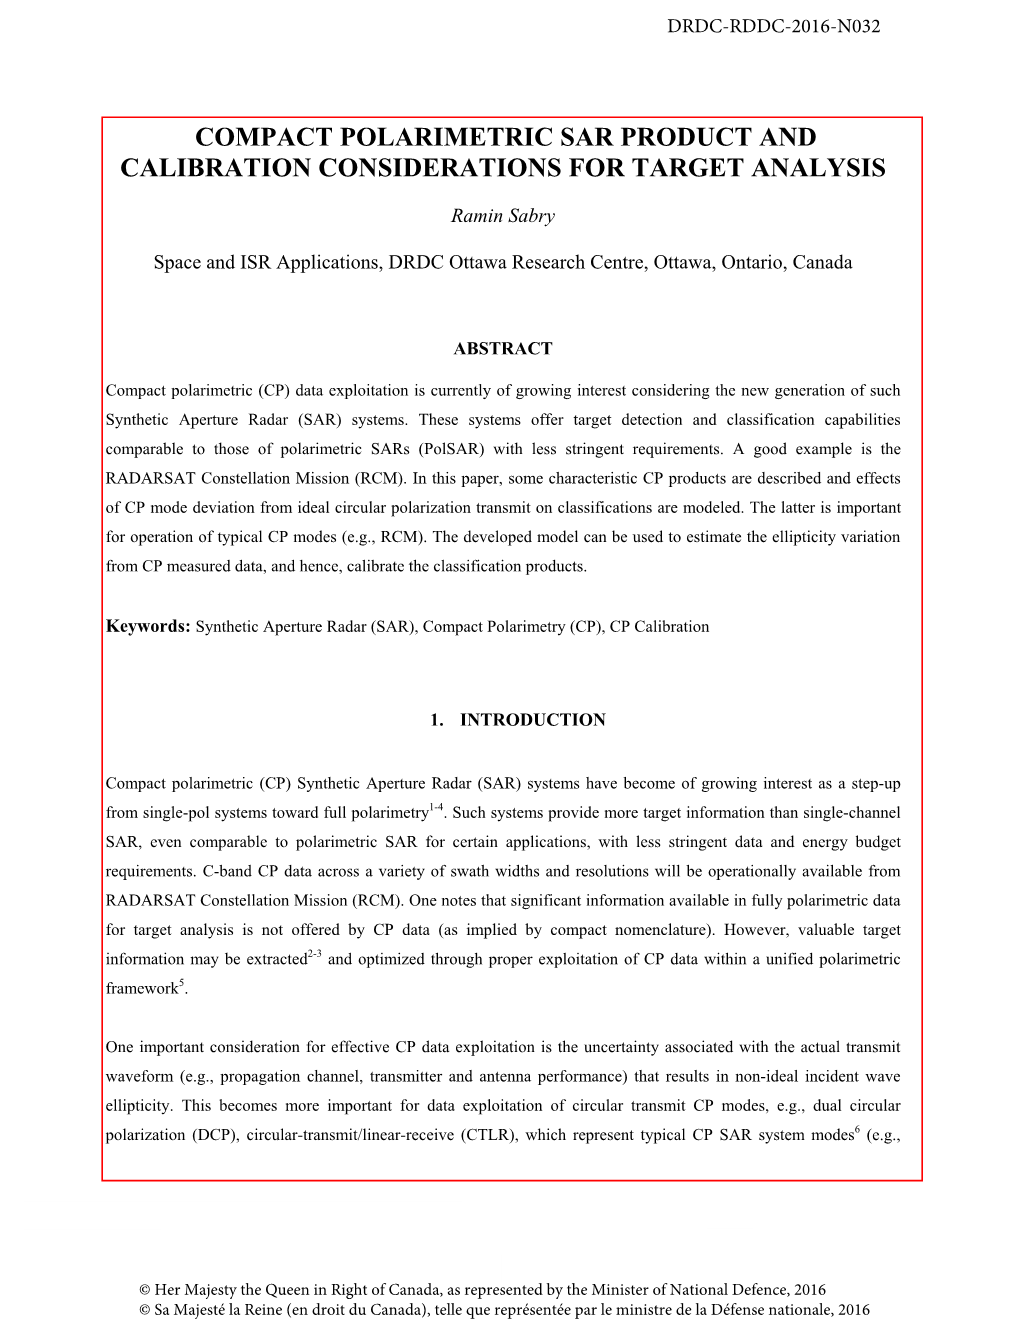 Compact Polarimetric Sar Product and Calibration Considerations for Target Analysis